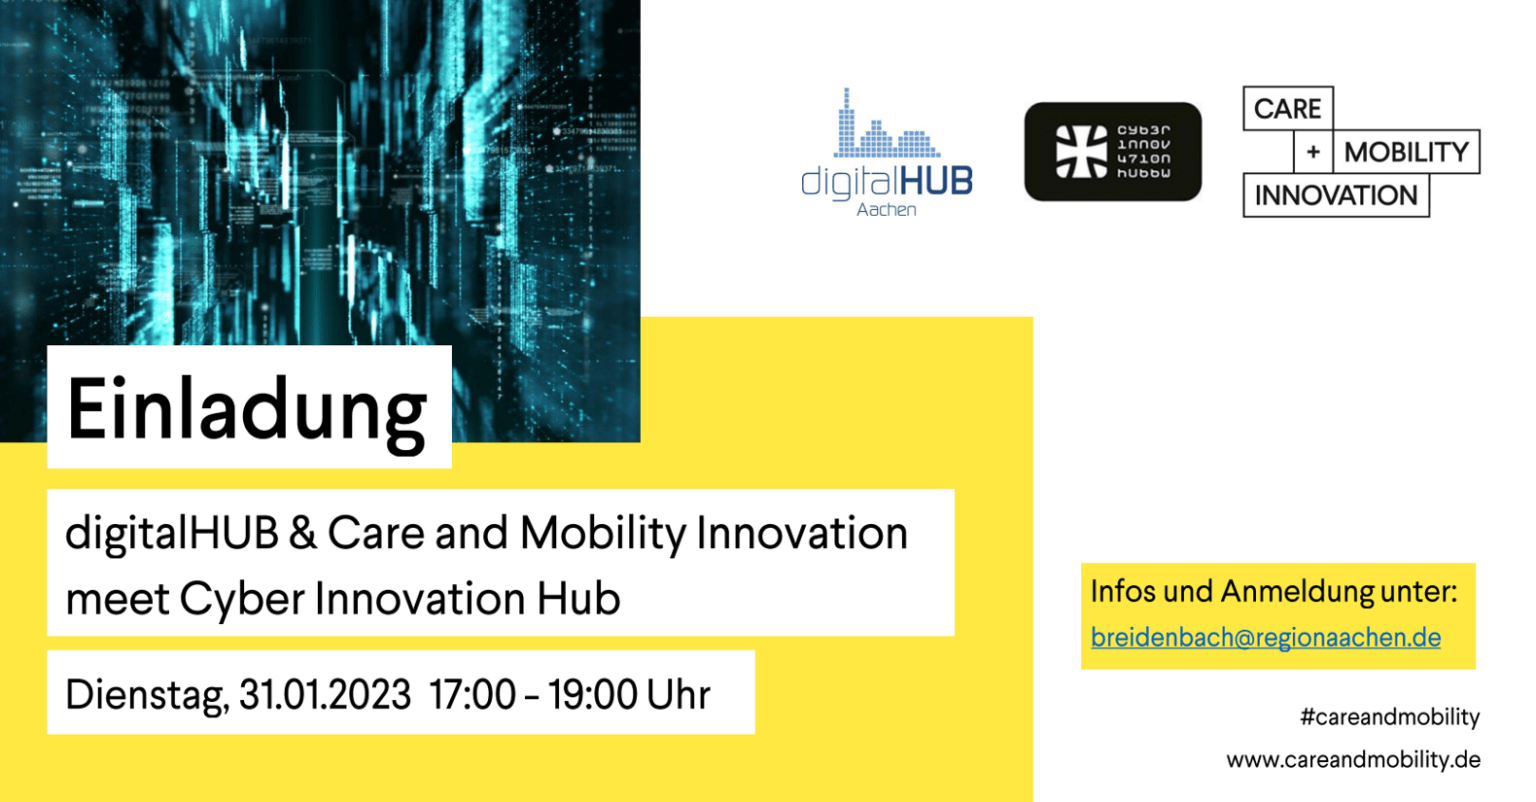 Einladung digitalHUB & Care and Mobility Innovation meet Cyber Innovation Hub